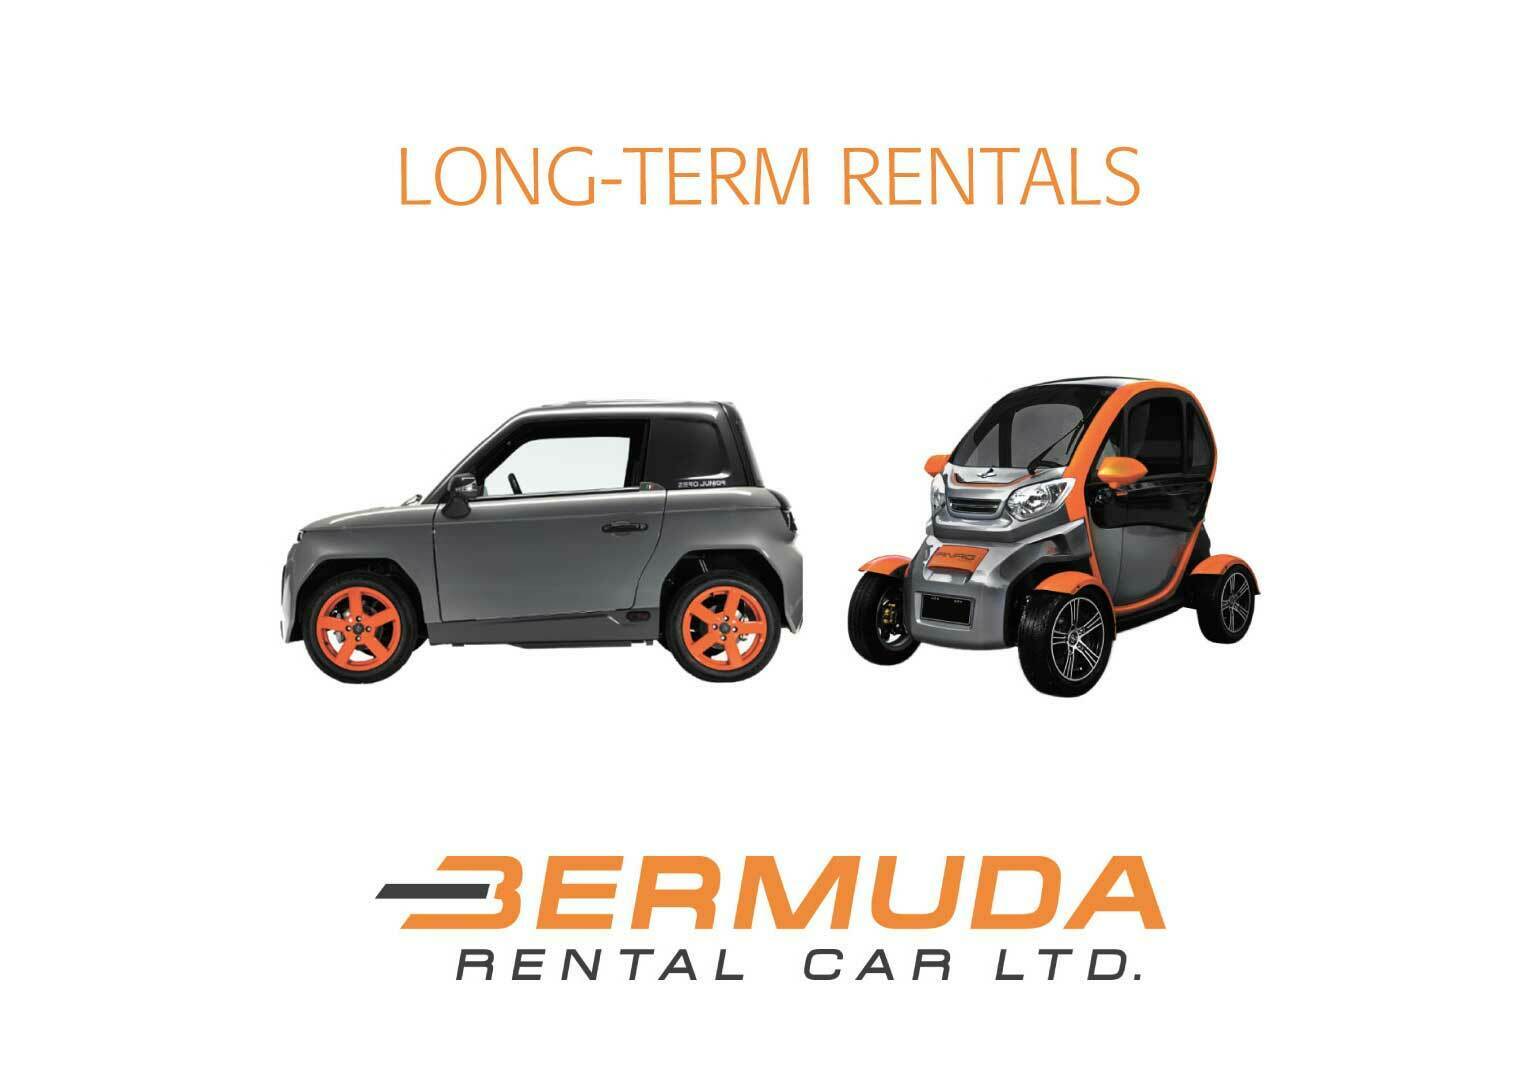 Long Term Rental Special from Bermuda Rental Car Ltd.